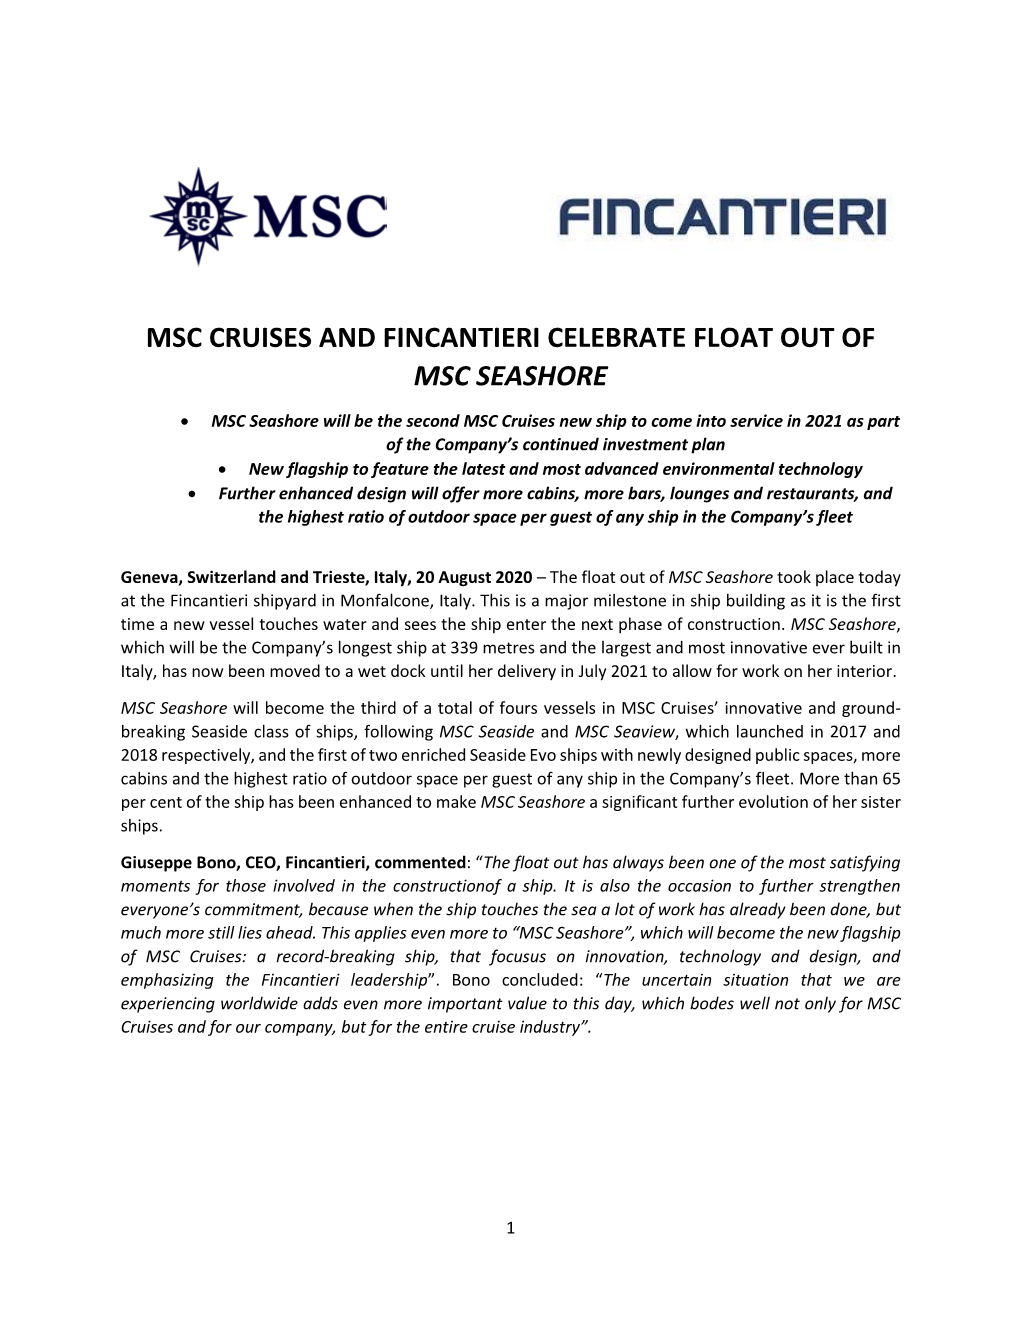 Msc Cruises and Fincantieri Celebrate Float out of Msc Seashore